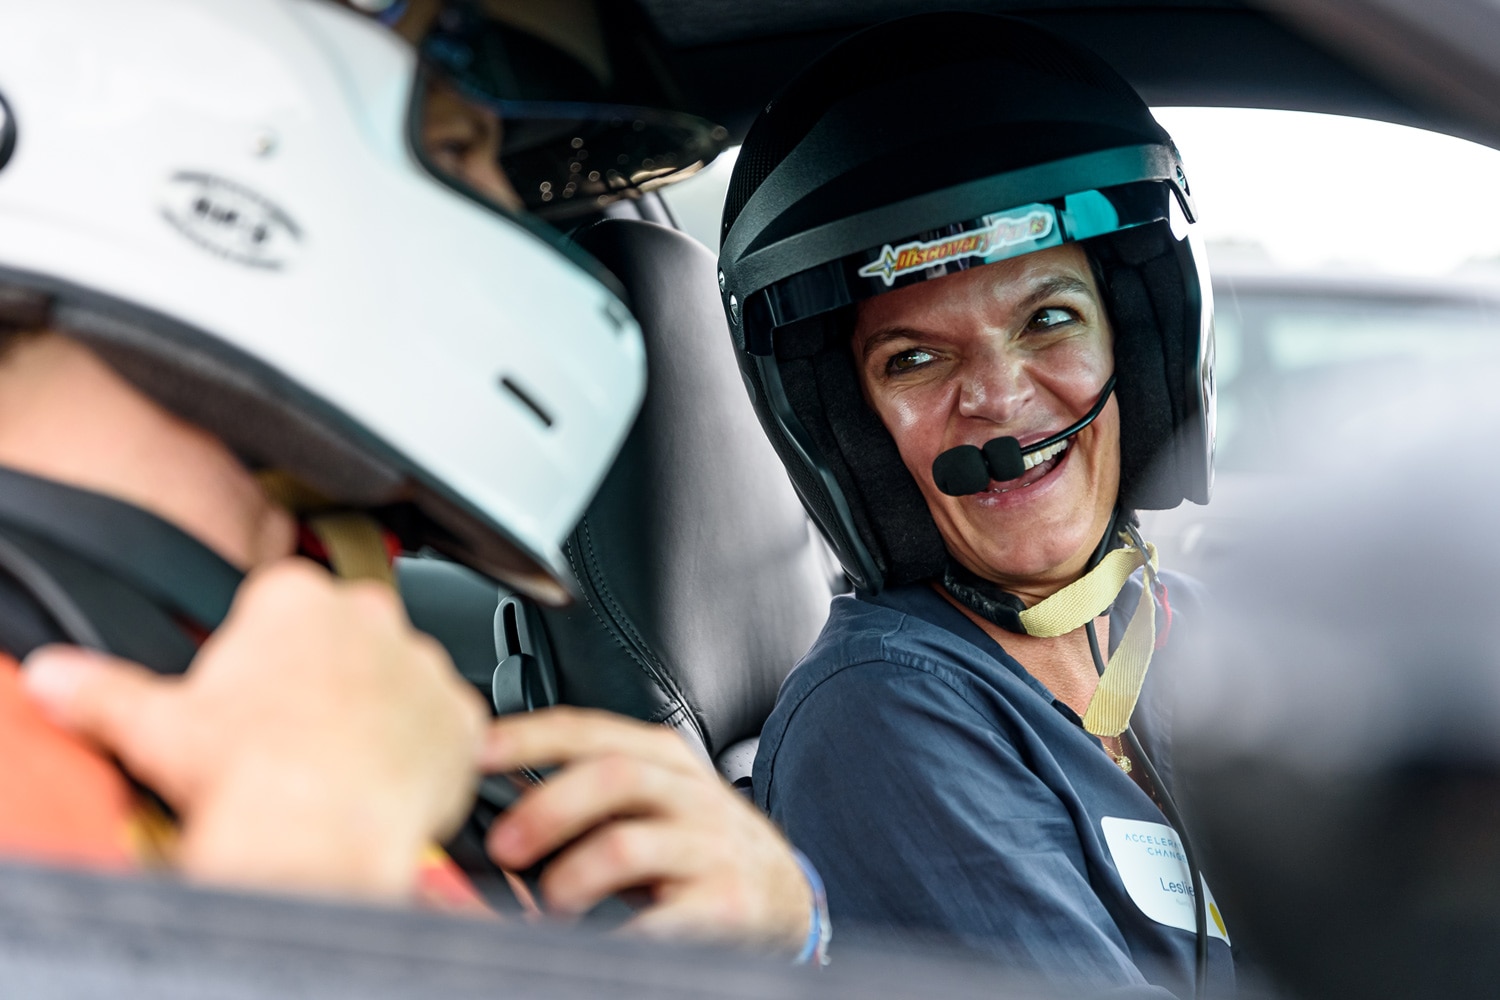 Two people wearing helmets sitting in a car.